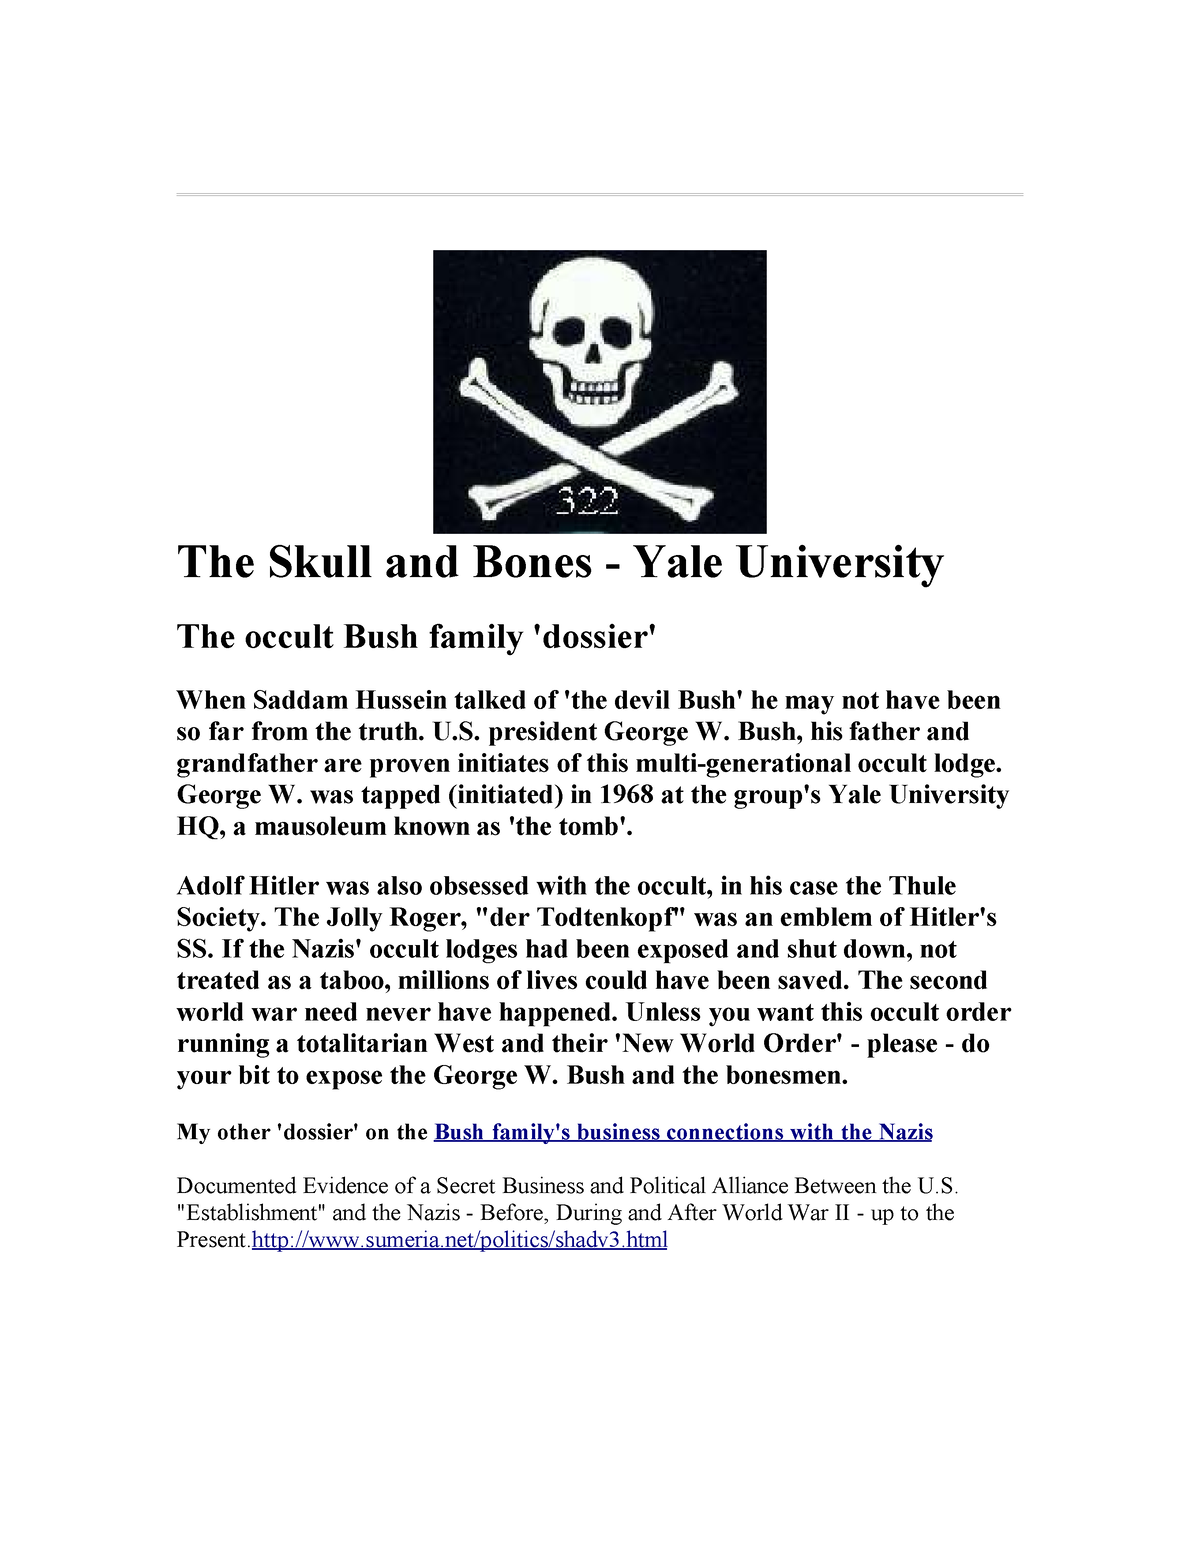 Hall of Skull and Bones fraternity house, Yale University, New